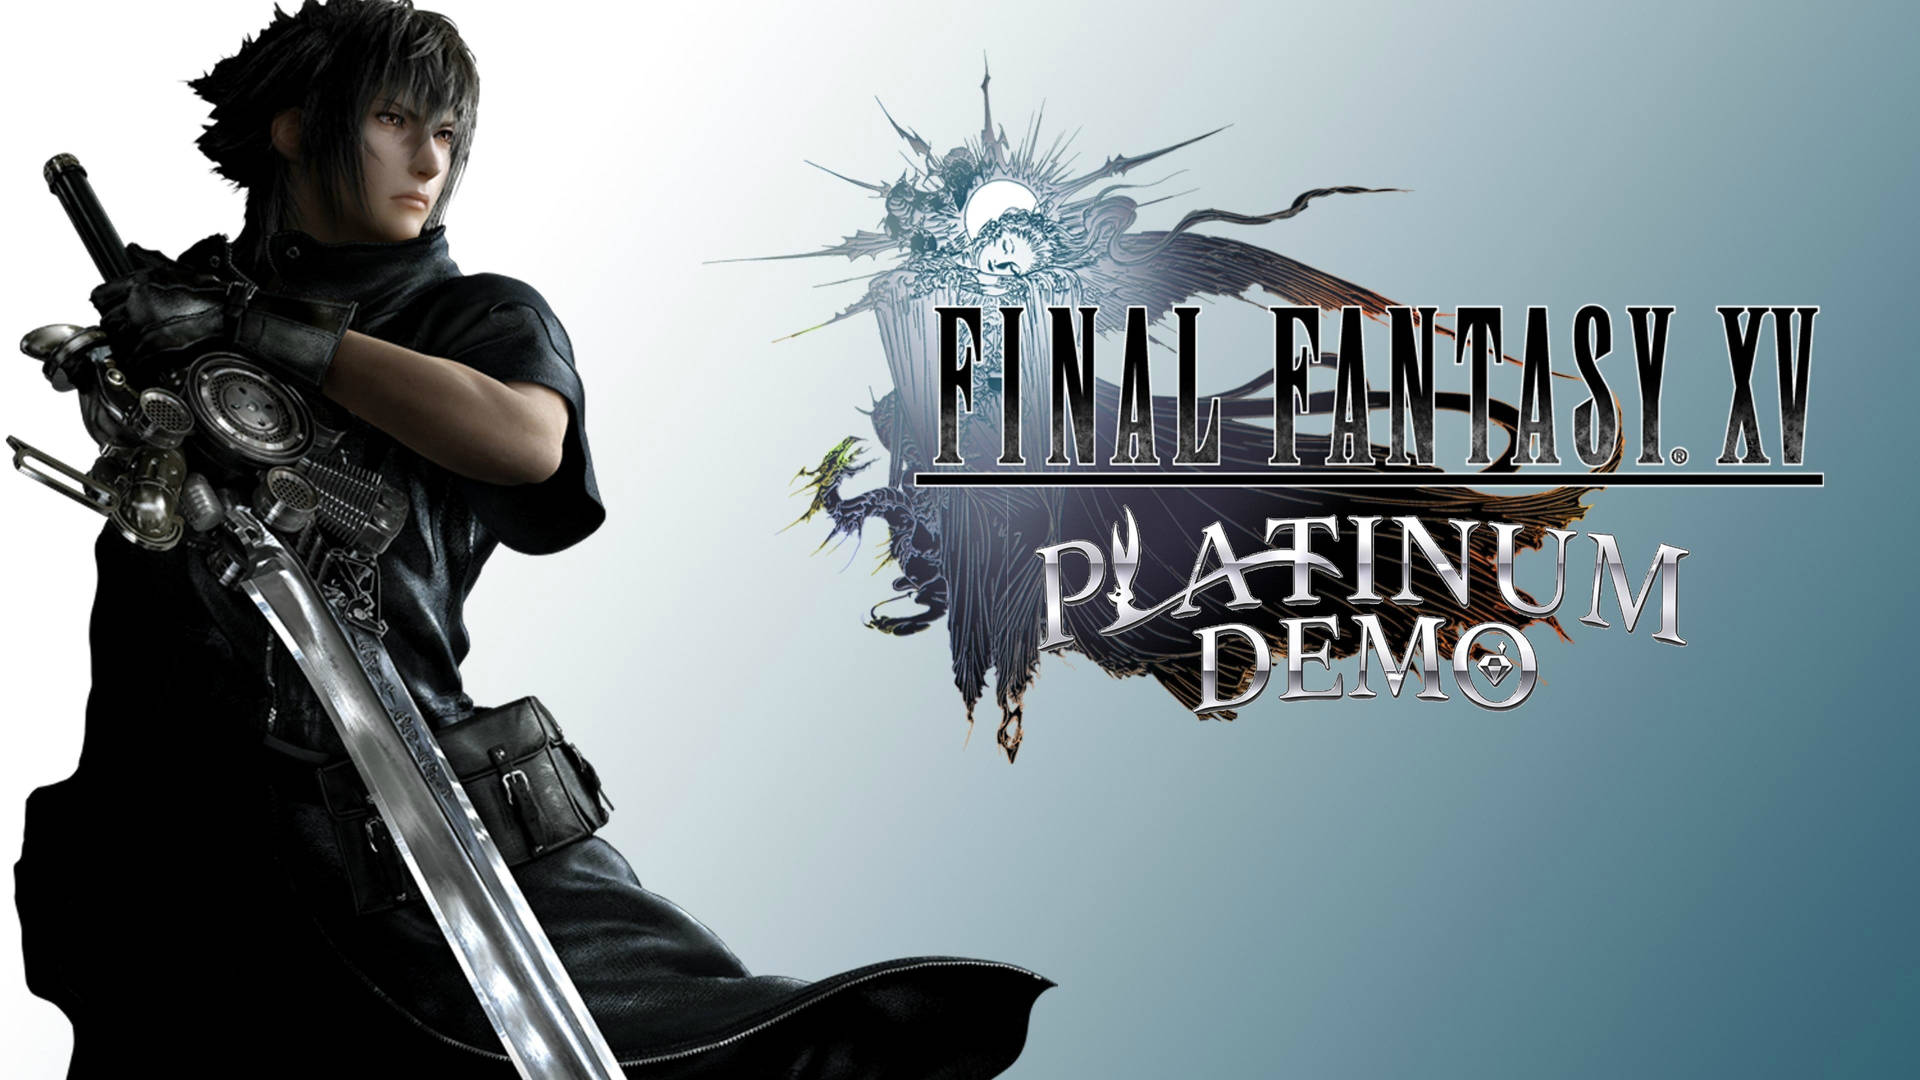 Final Fantasy Xv Platinum Demo Background